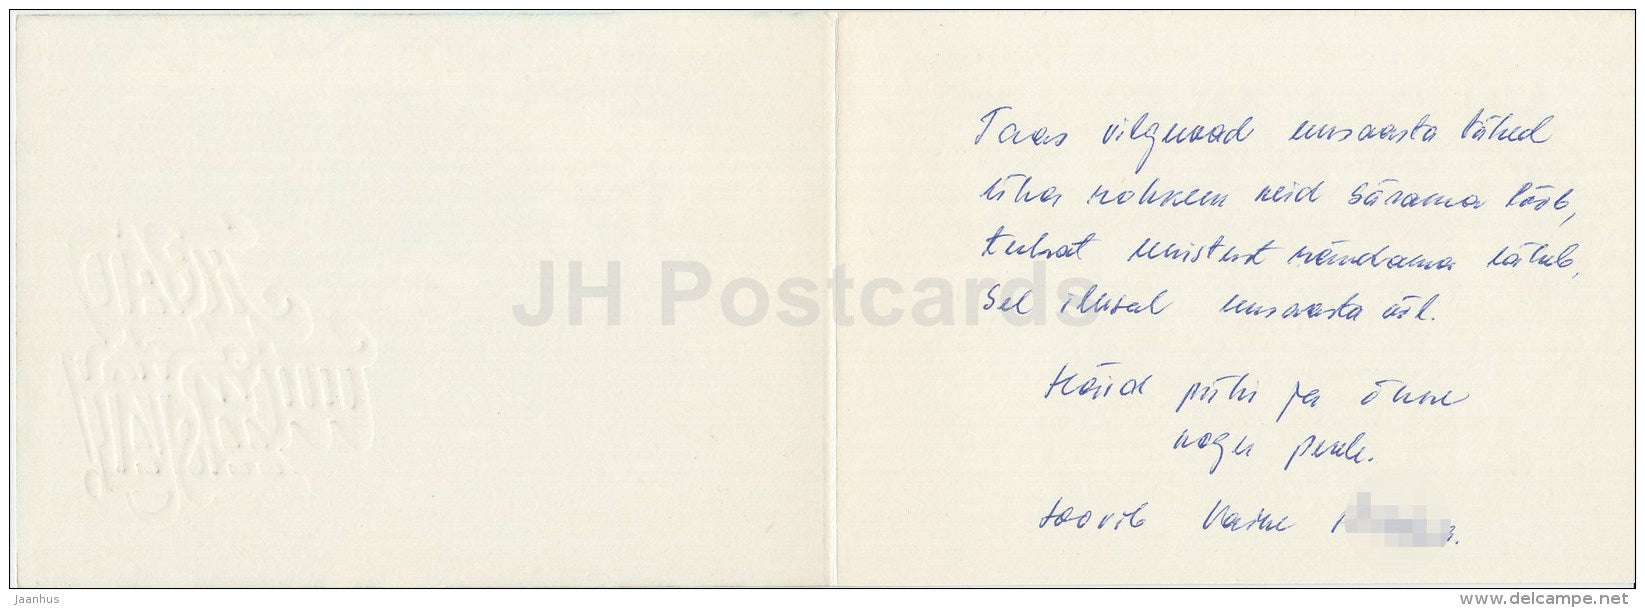 New Year Greeting Card - fir tree - 1984 - Estonia USSR - used - JH Postcards